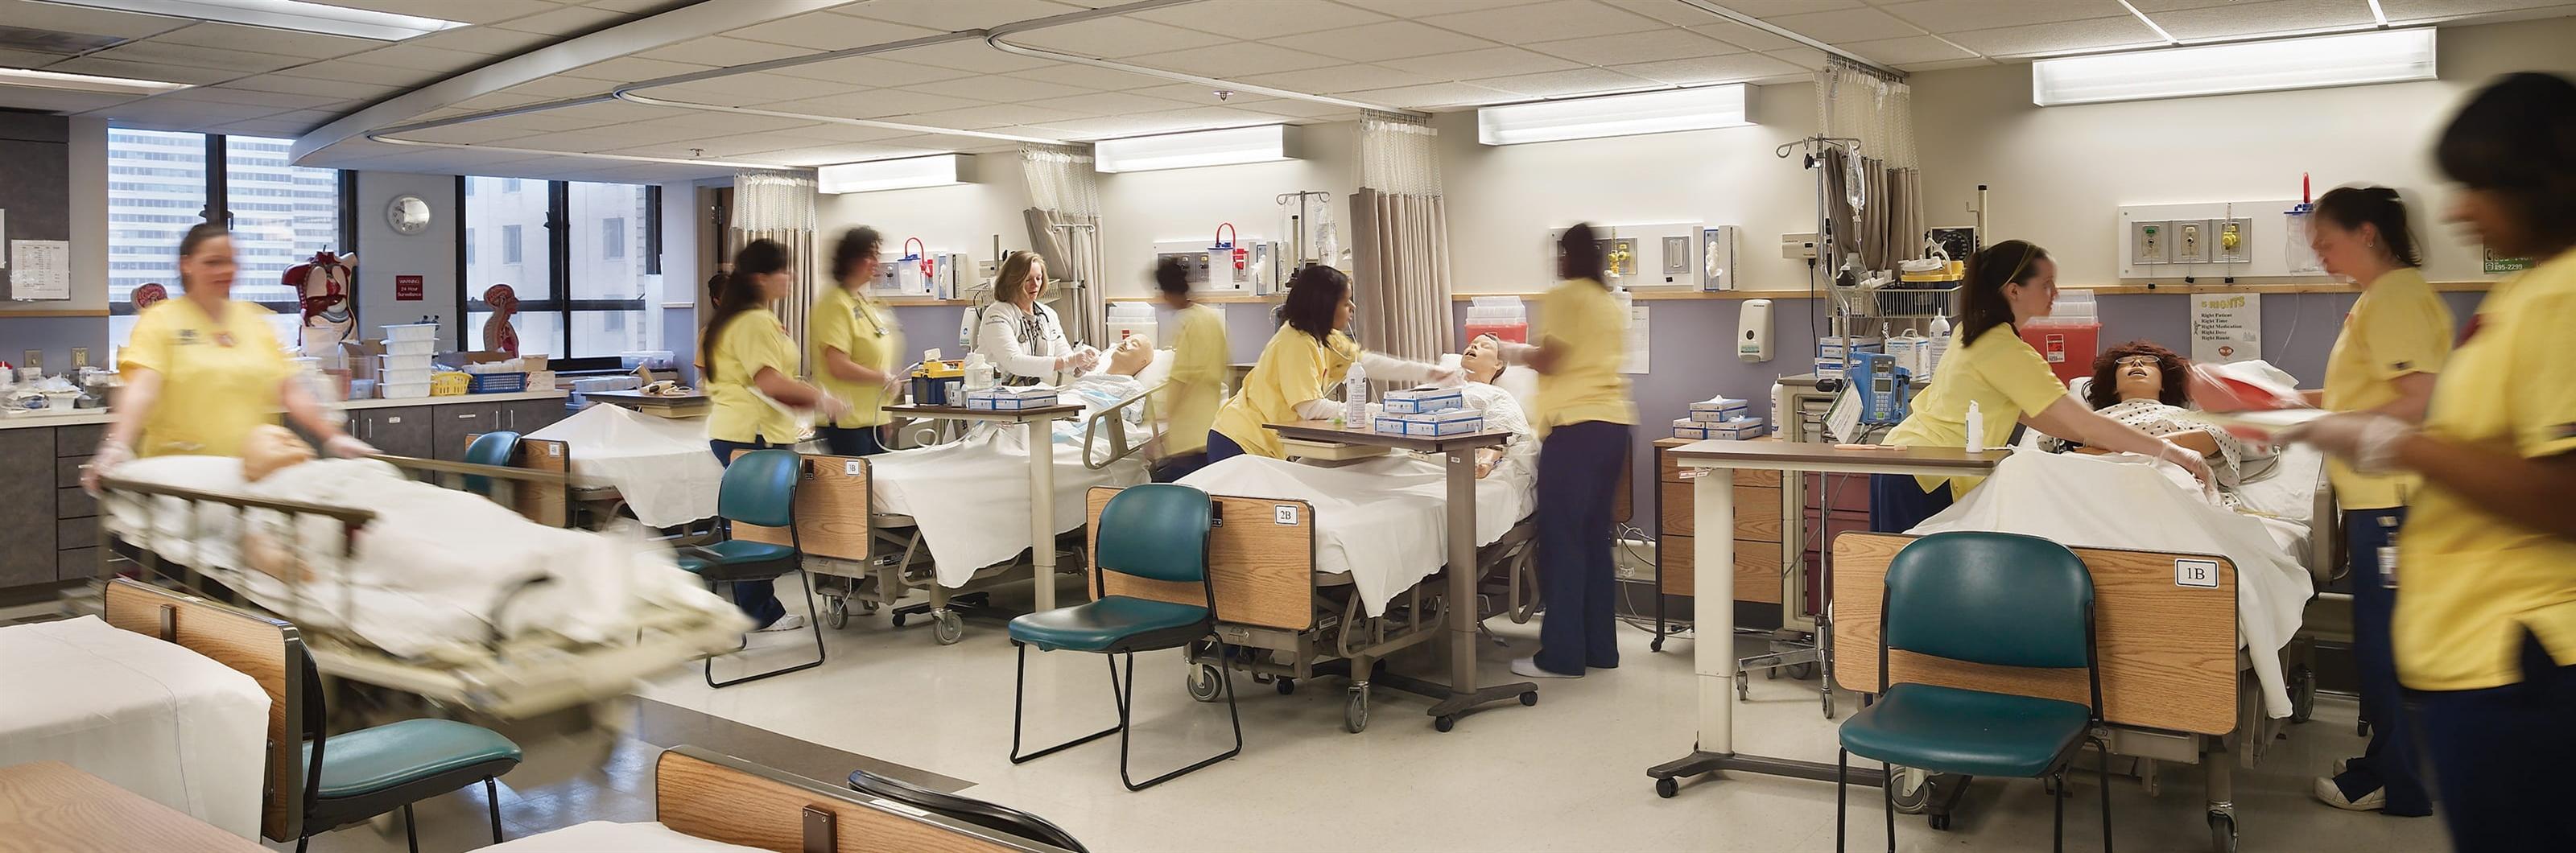 Nursing Students in hospital simulation